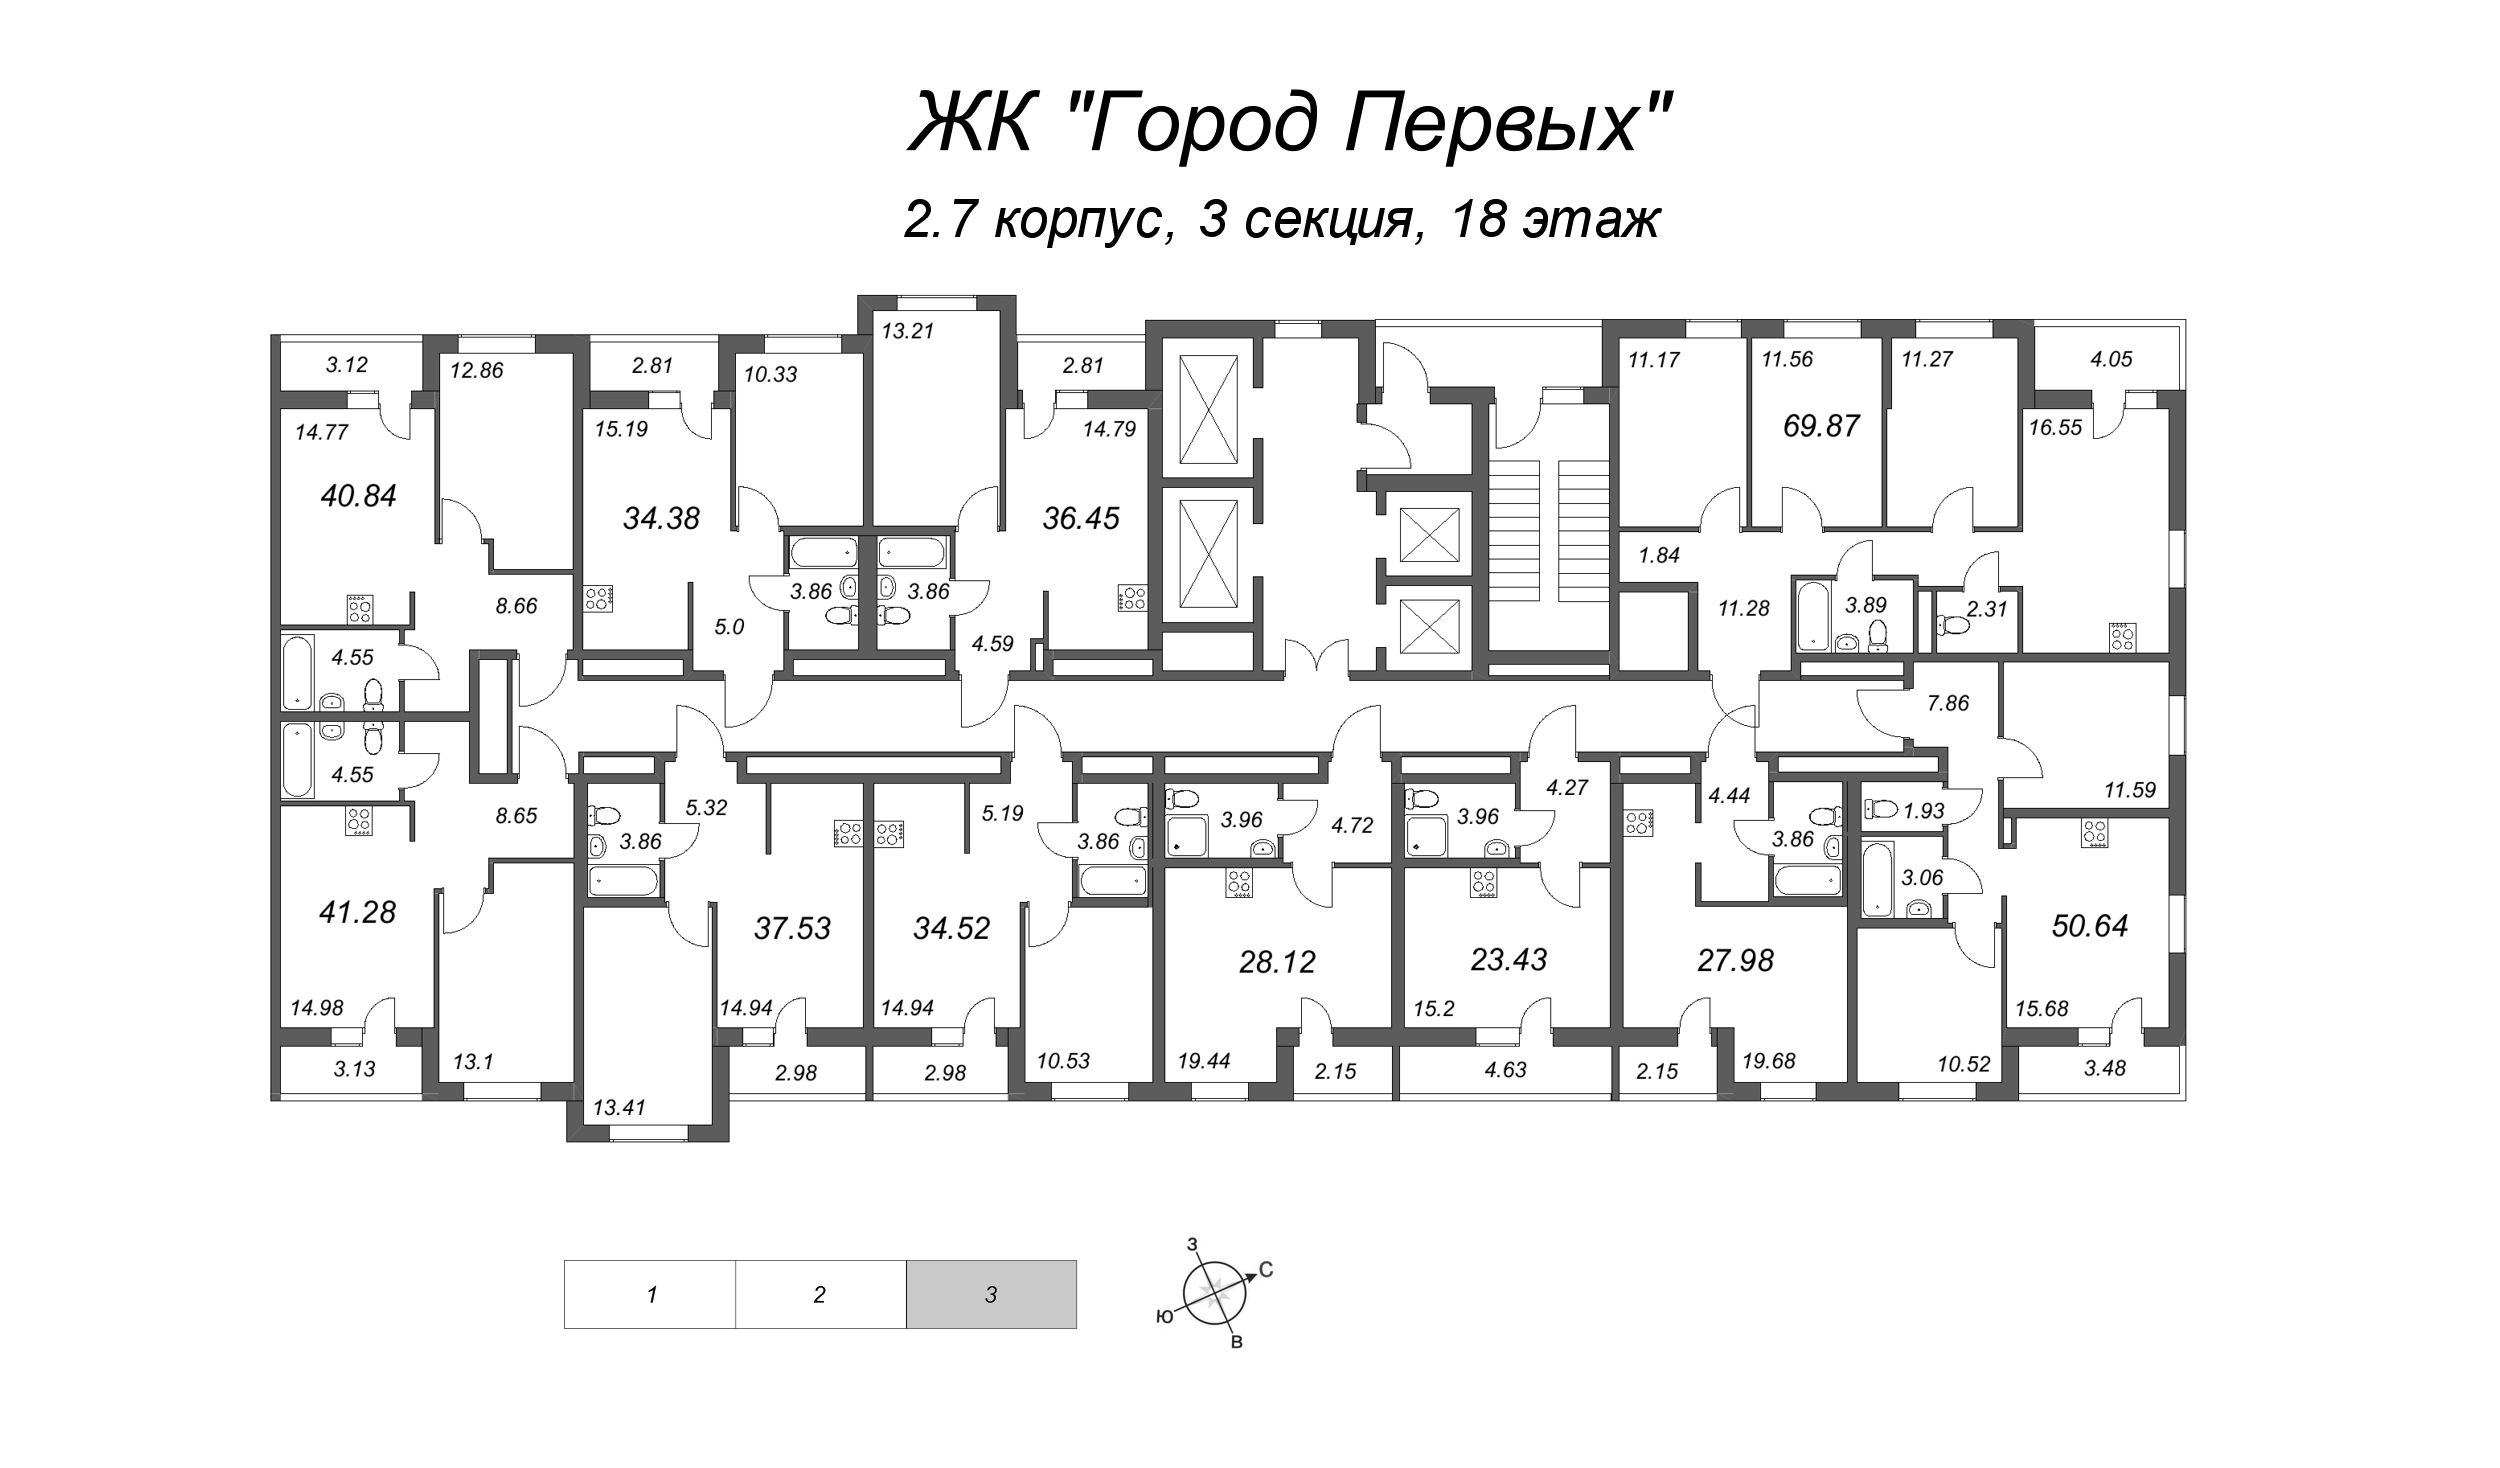 2-комнатная (Евро) квартира, 40.84 м² - планировка этажа